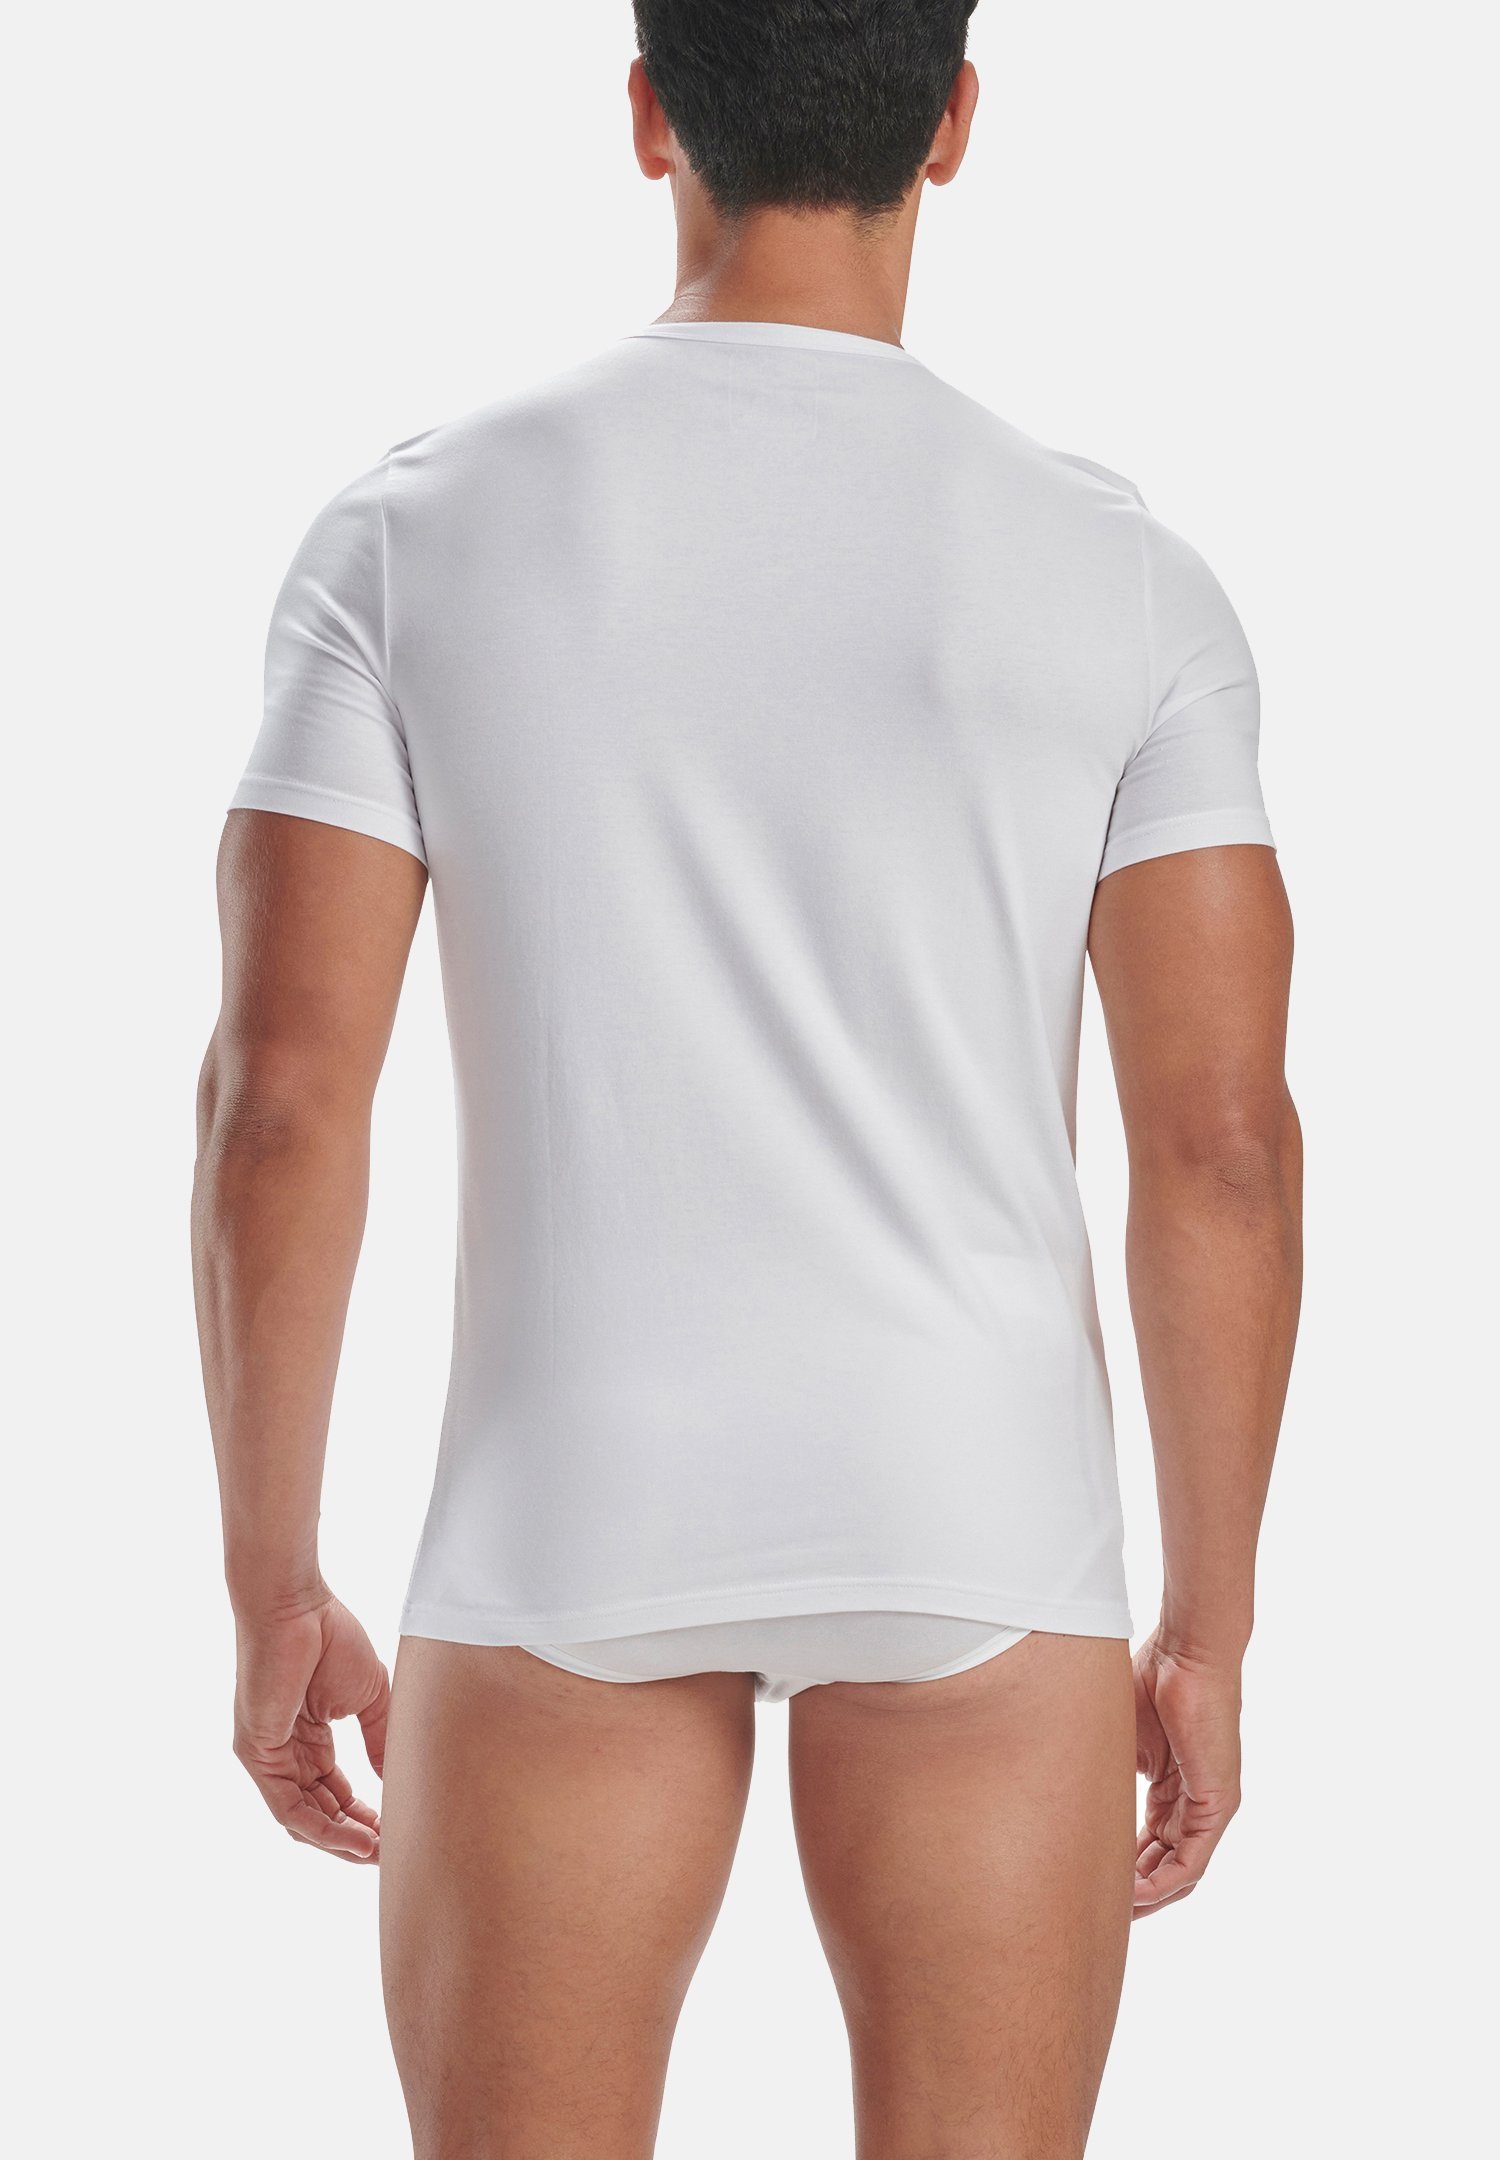 adidas T-Shirt Neck Performance White Poloshirt (6PK) Crew